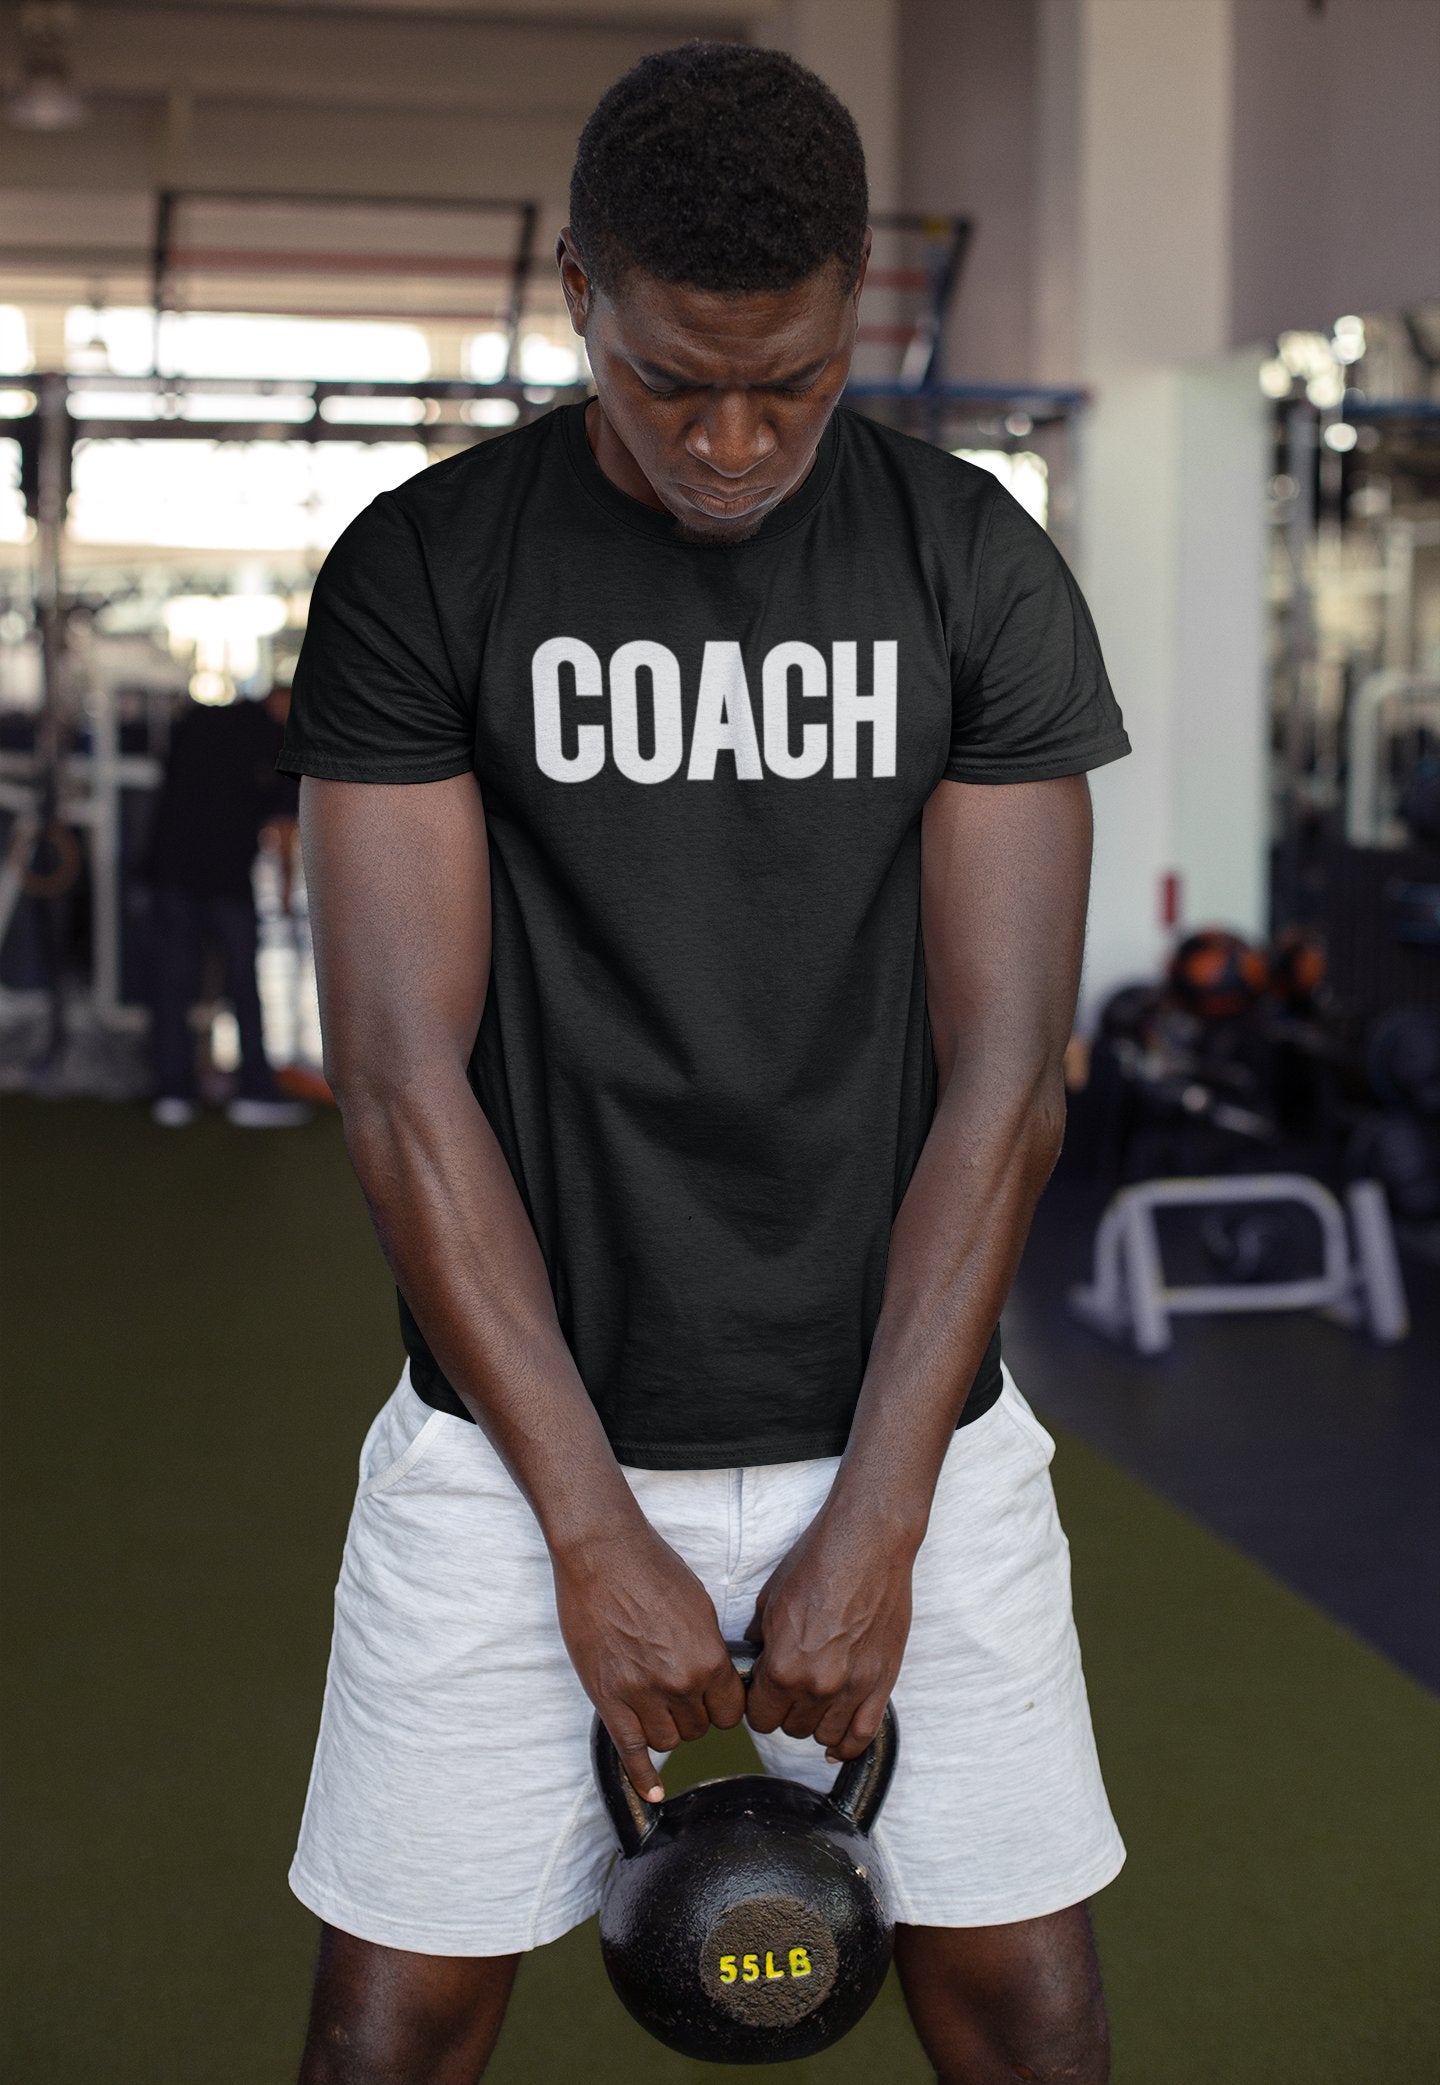 Coach Men's T-Shirt (Solid Design, Green & White)